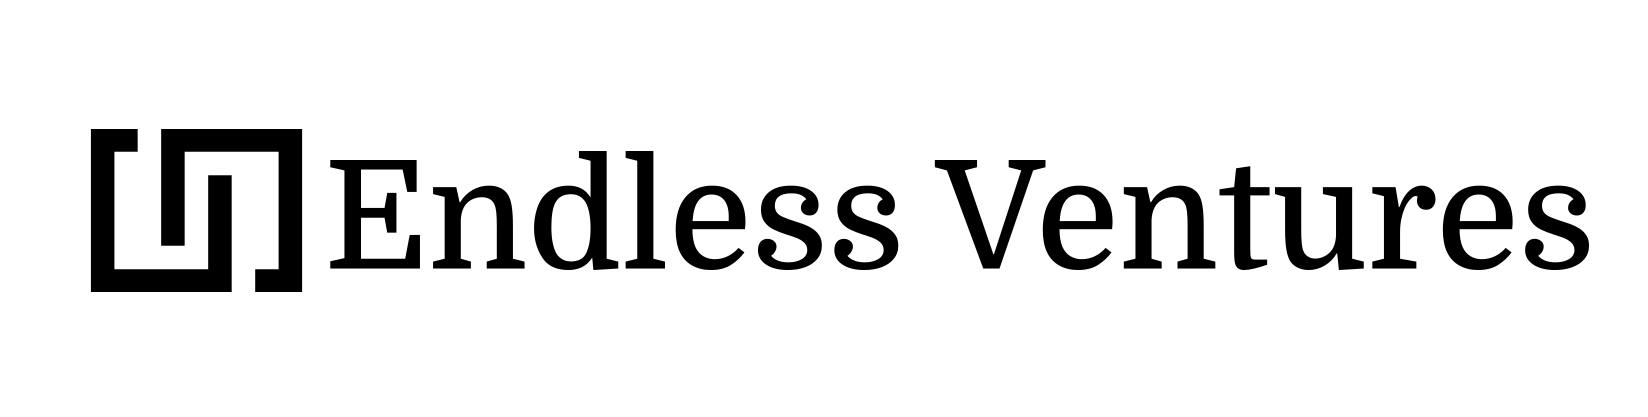 endless-ventures-high-resolution-logo-1